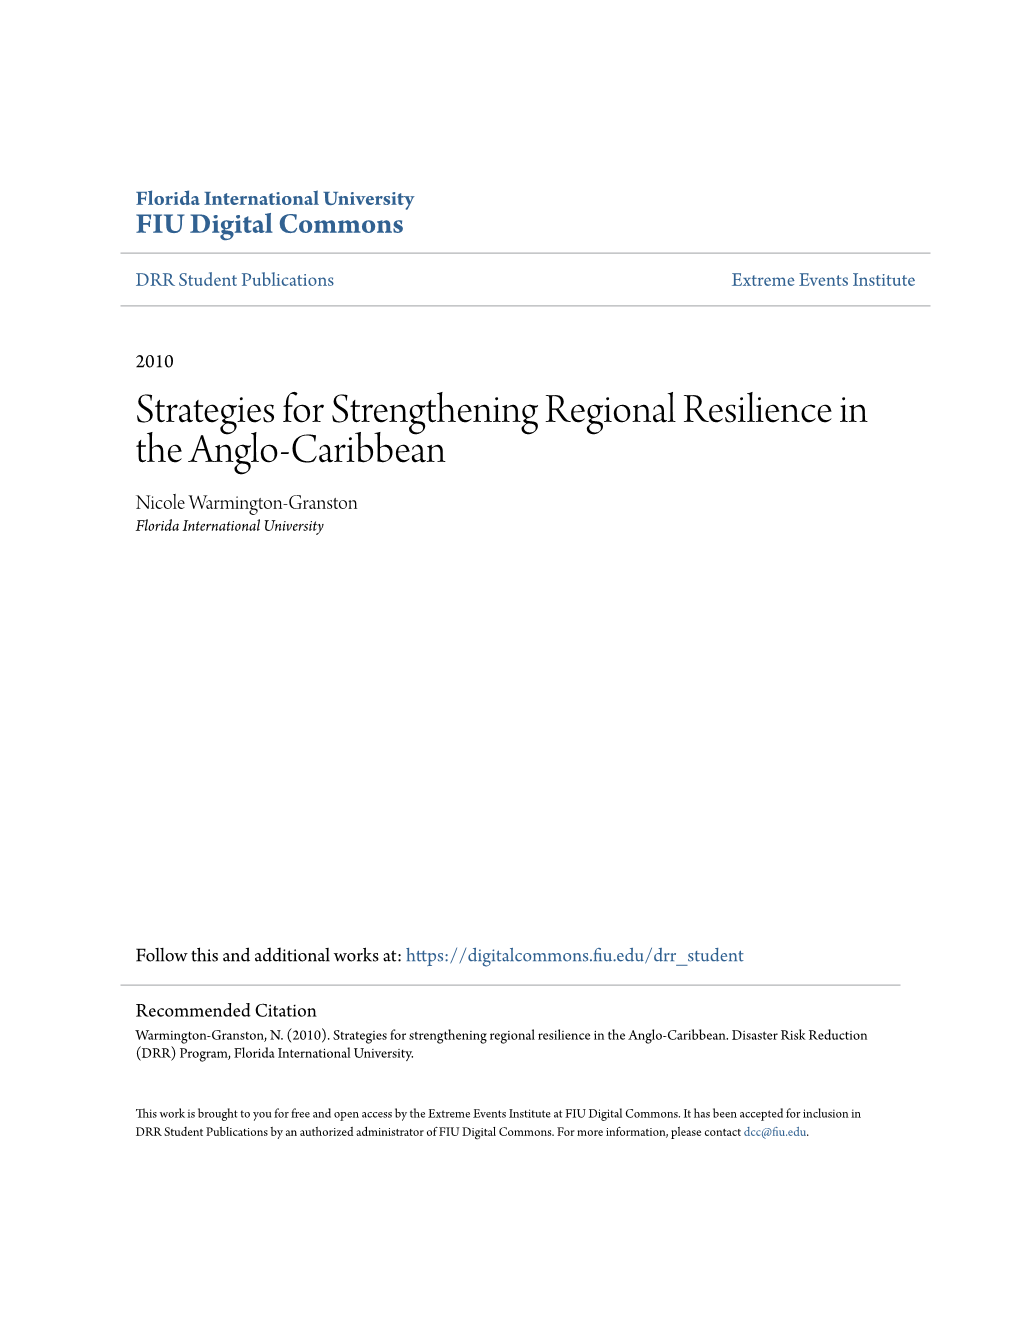 Strategies for Strengthening Regional Resilience in the Anglo-Caribbean Nicole Warmington-Granston Florida International University